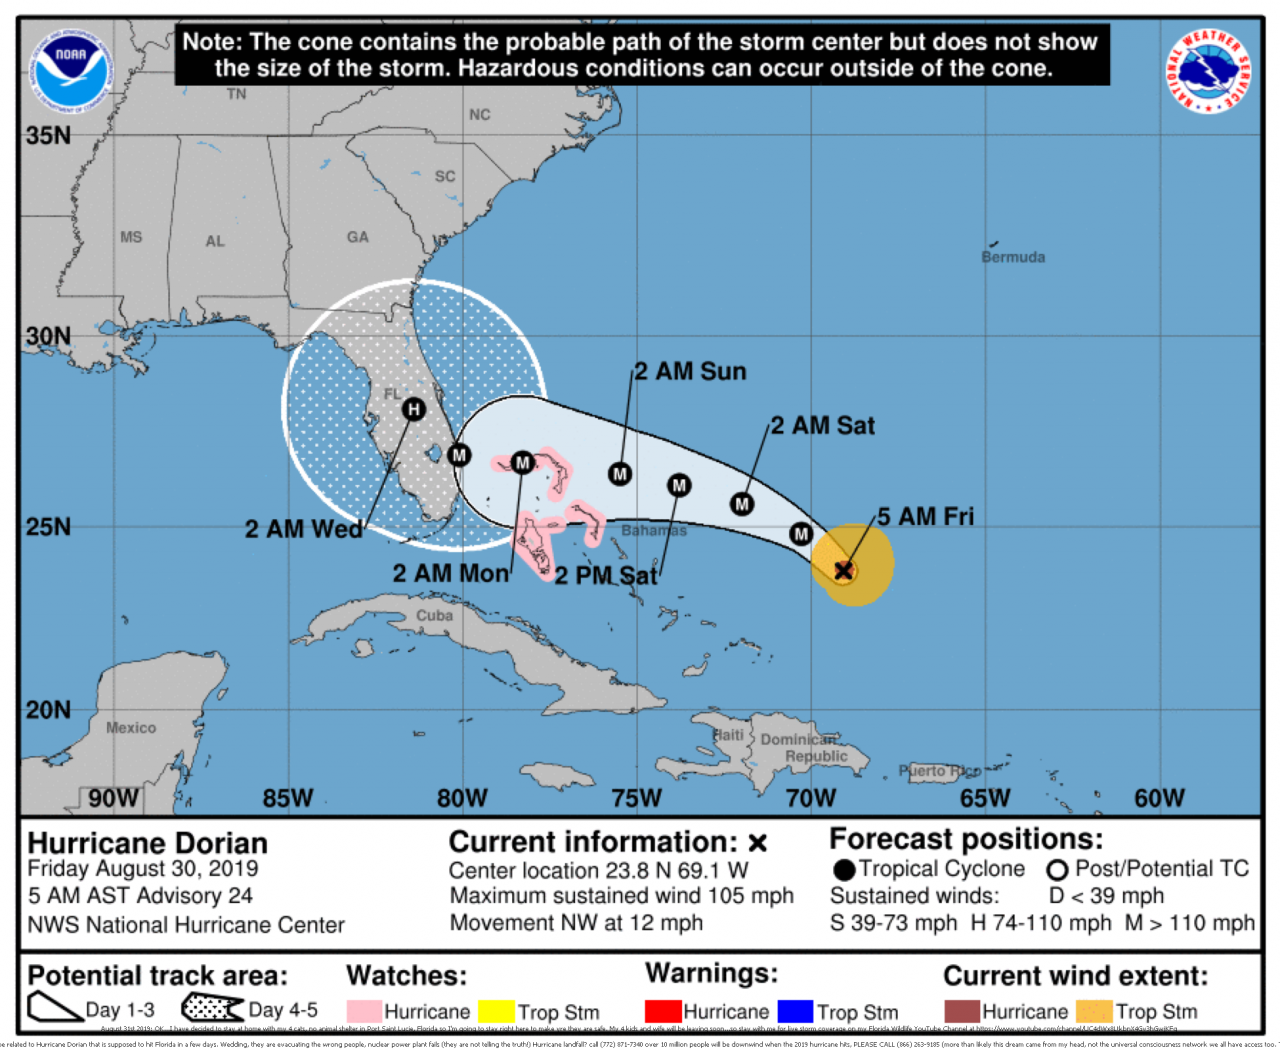 Hurricane Dorian Aug 2019 prediction by Psychic Brian Ladd hurricane-dorian-5-a m -friday
Hurricane Dorian Aug 2019 prediction by Psychic Brian Ladd hurricane-dorian-5-a m -friday
